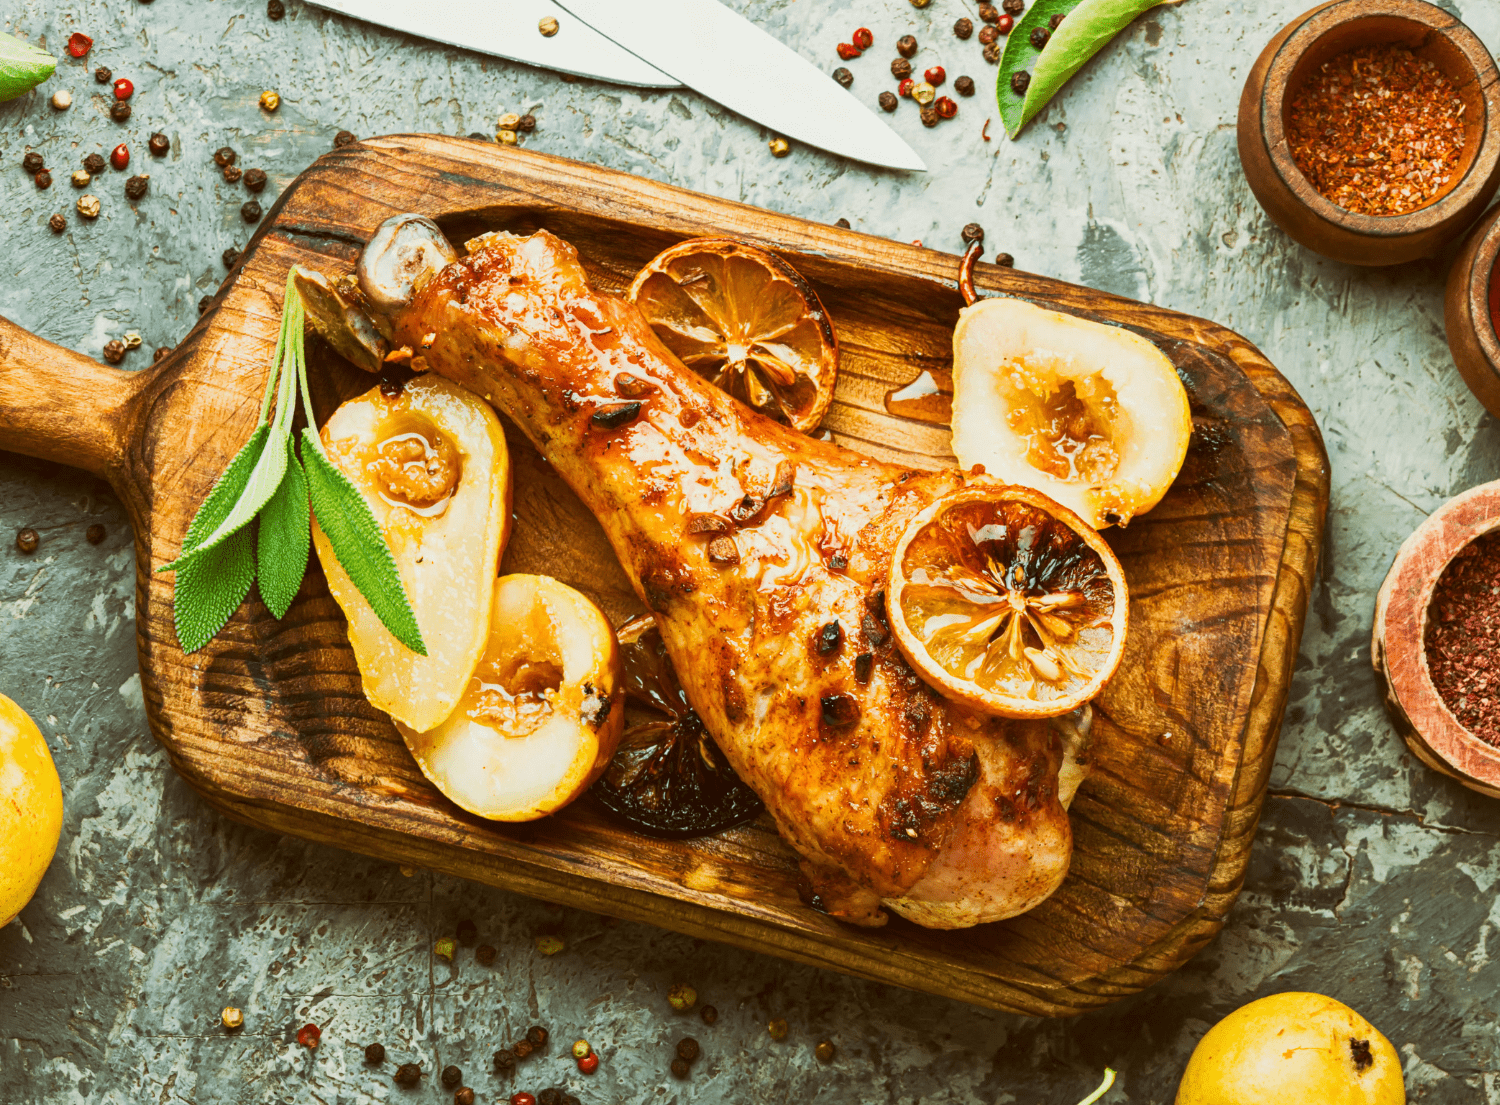 Grilled turkey leg on wooden tray